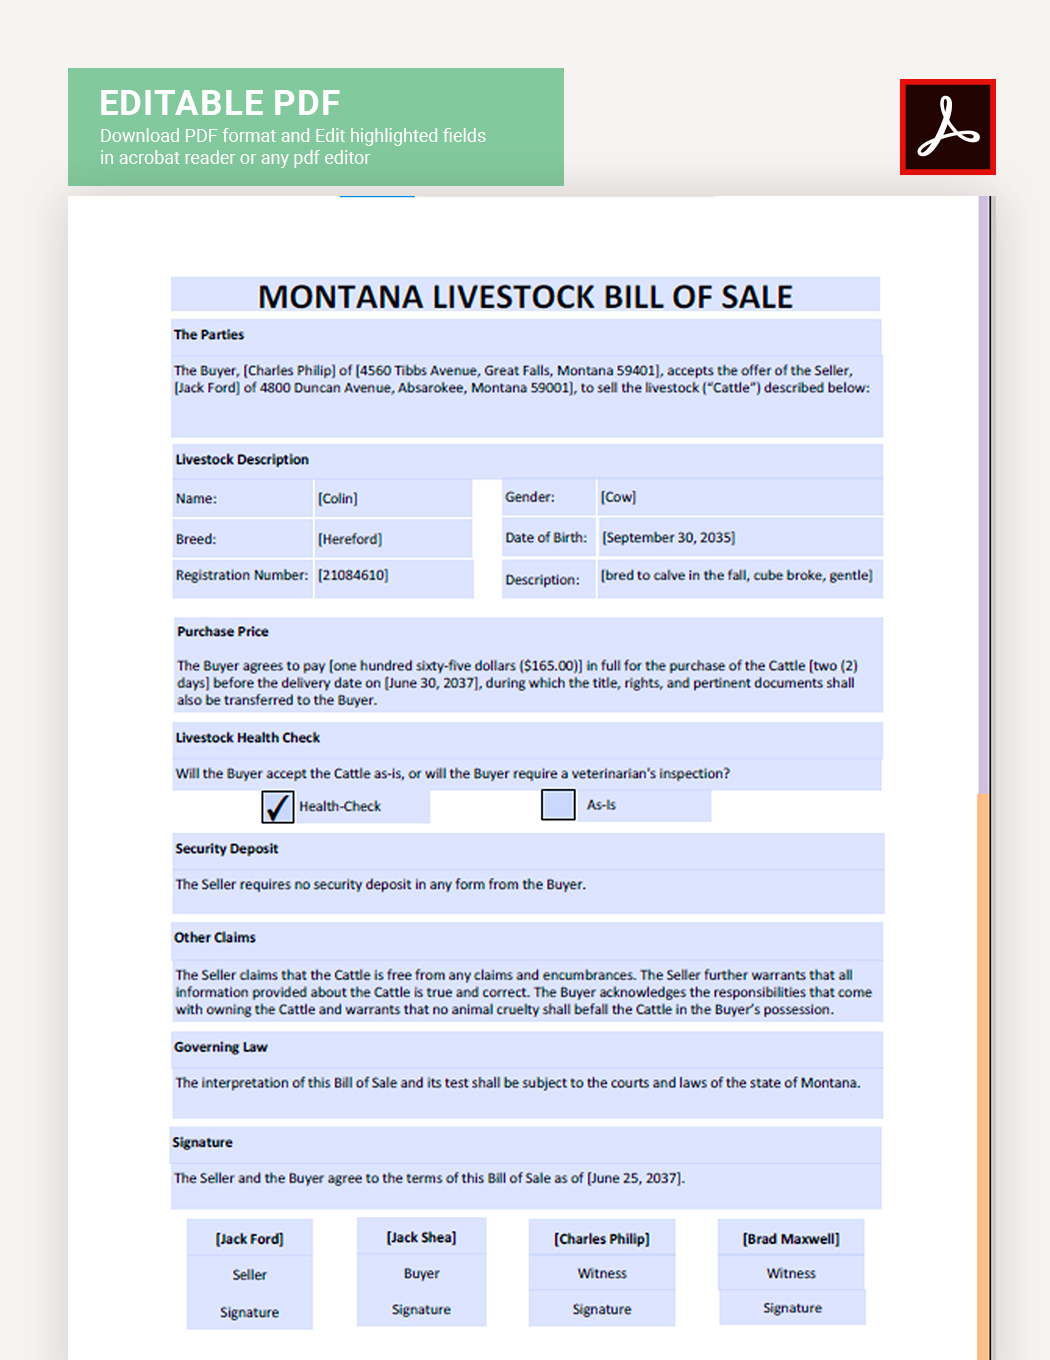 Montana Livestock Bill Of Sale Template Download in Word, Google Docs